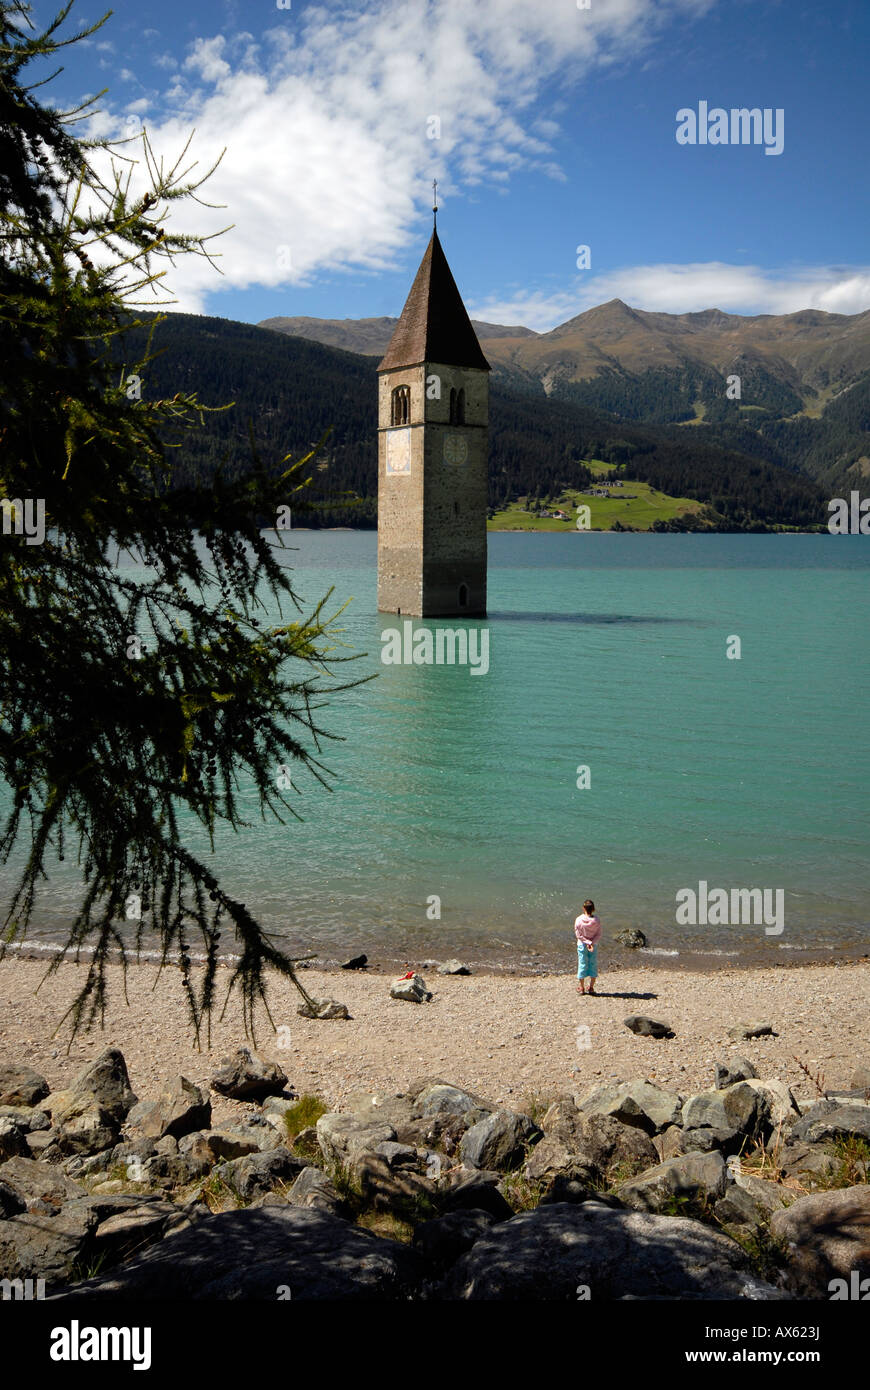 The church tower of Lago di Resia, sudtirol, italian alps Stock Photo